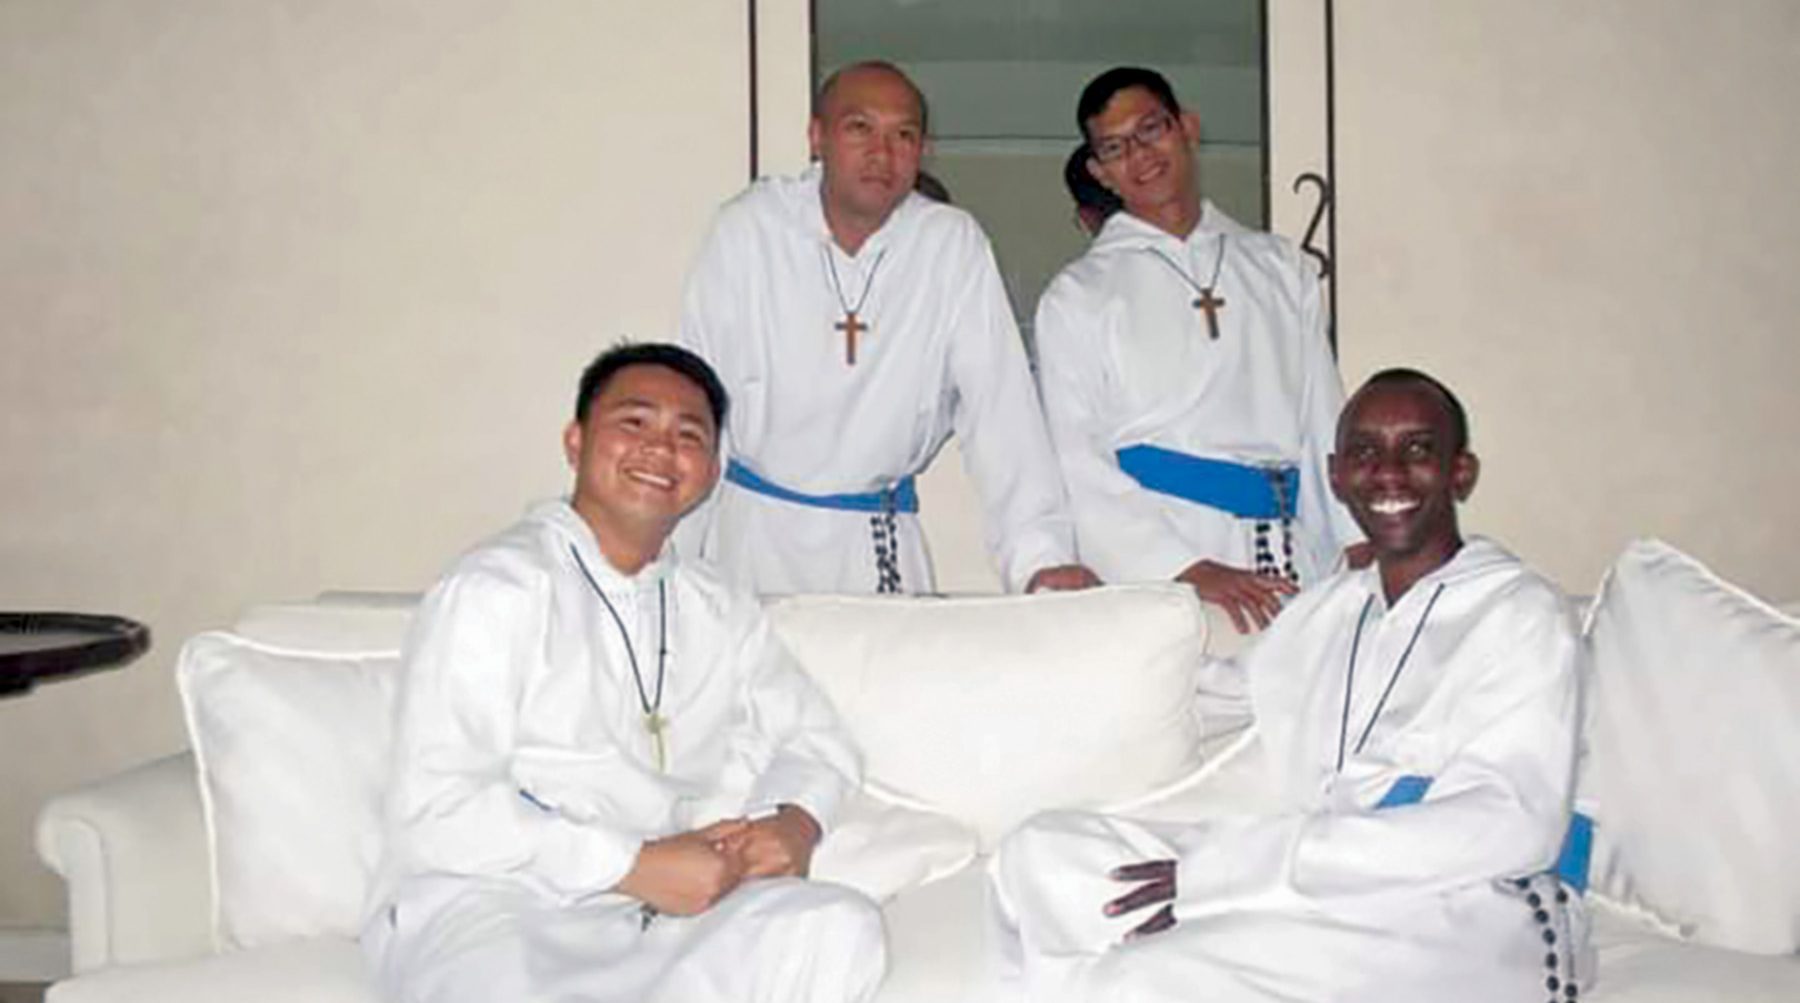 Back row, left, Fr. John Funtanares, MOP, MA '09